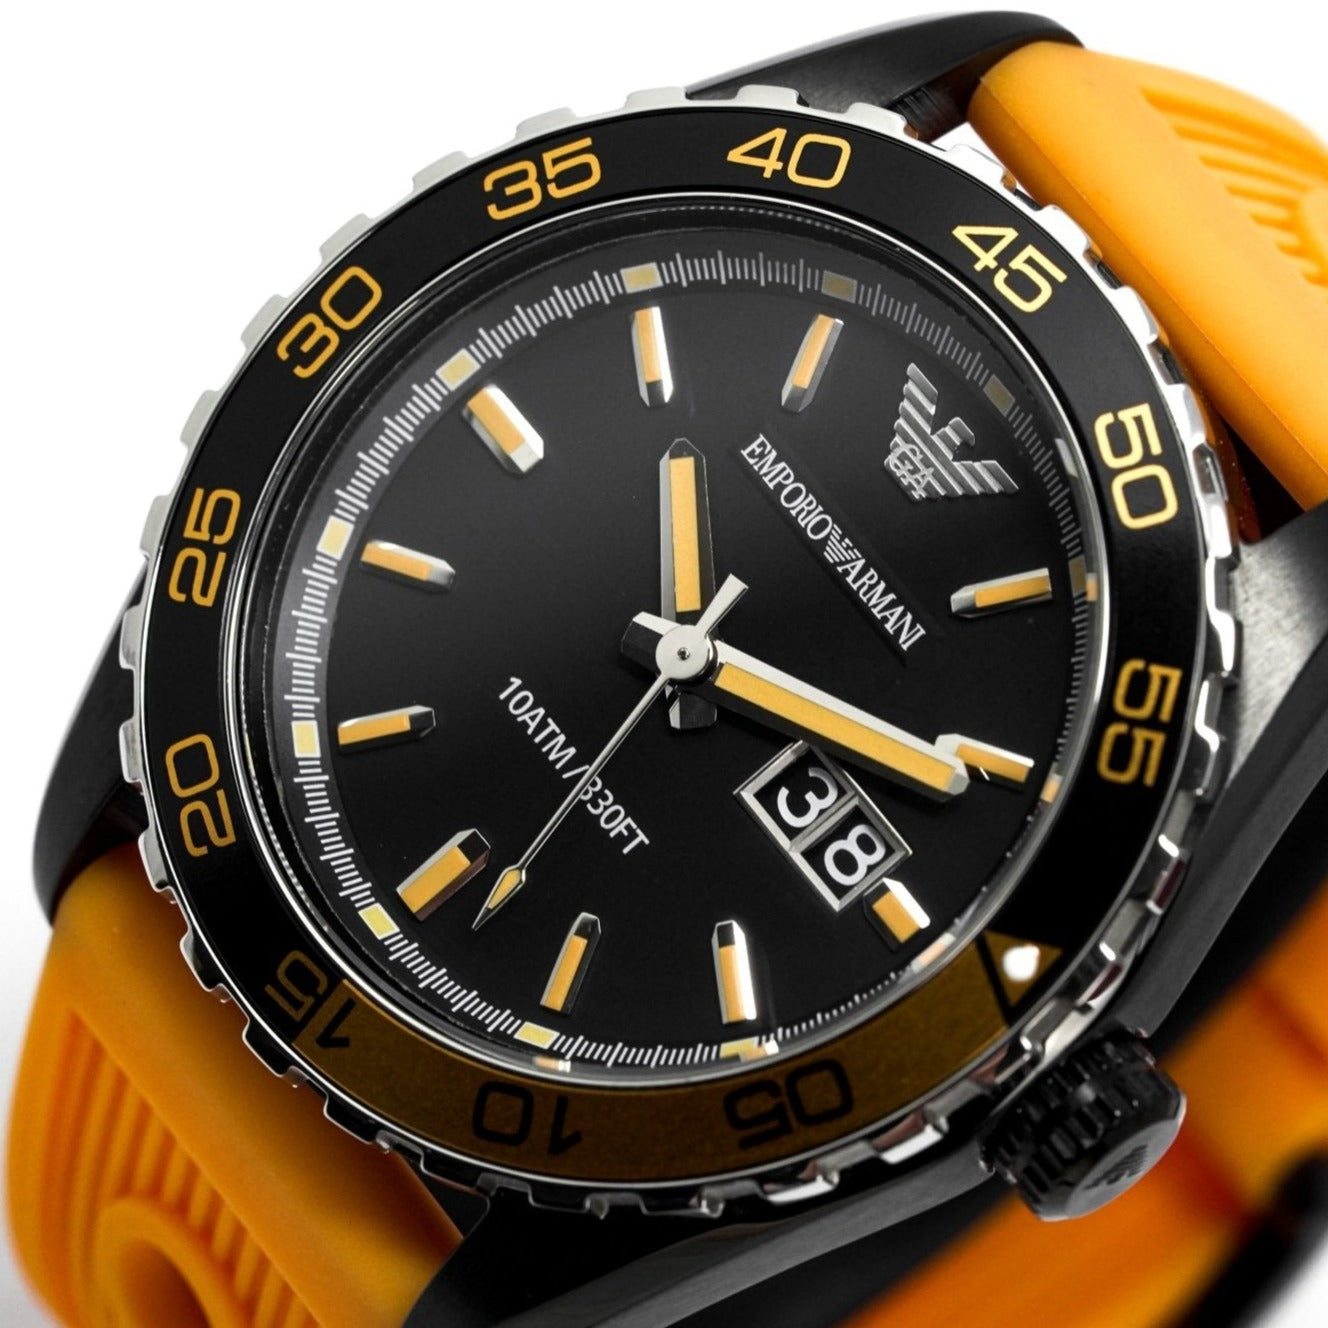 Emporio Armani Men's Sportivo Watch Orange AR6046 